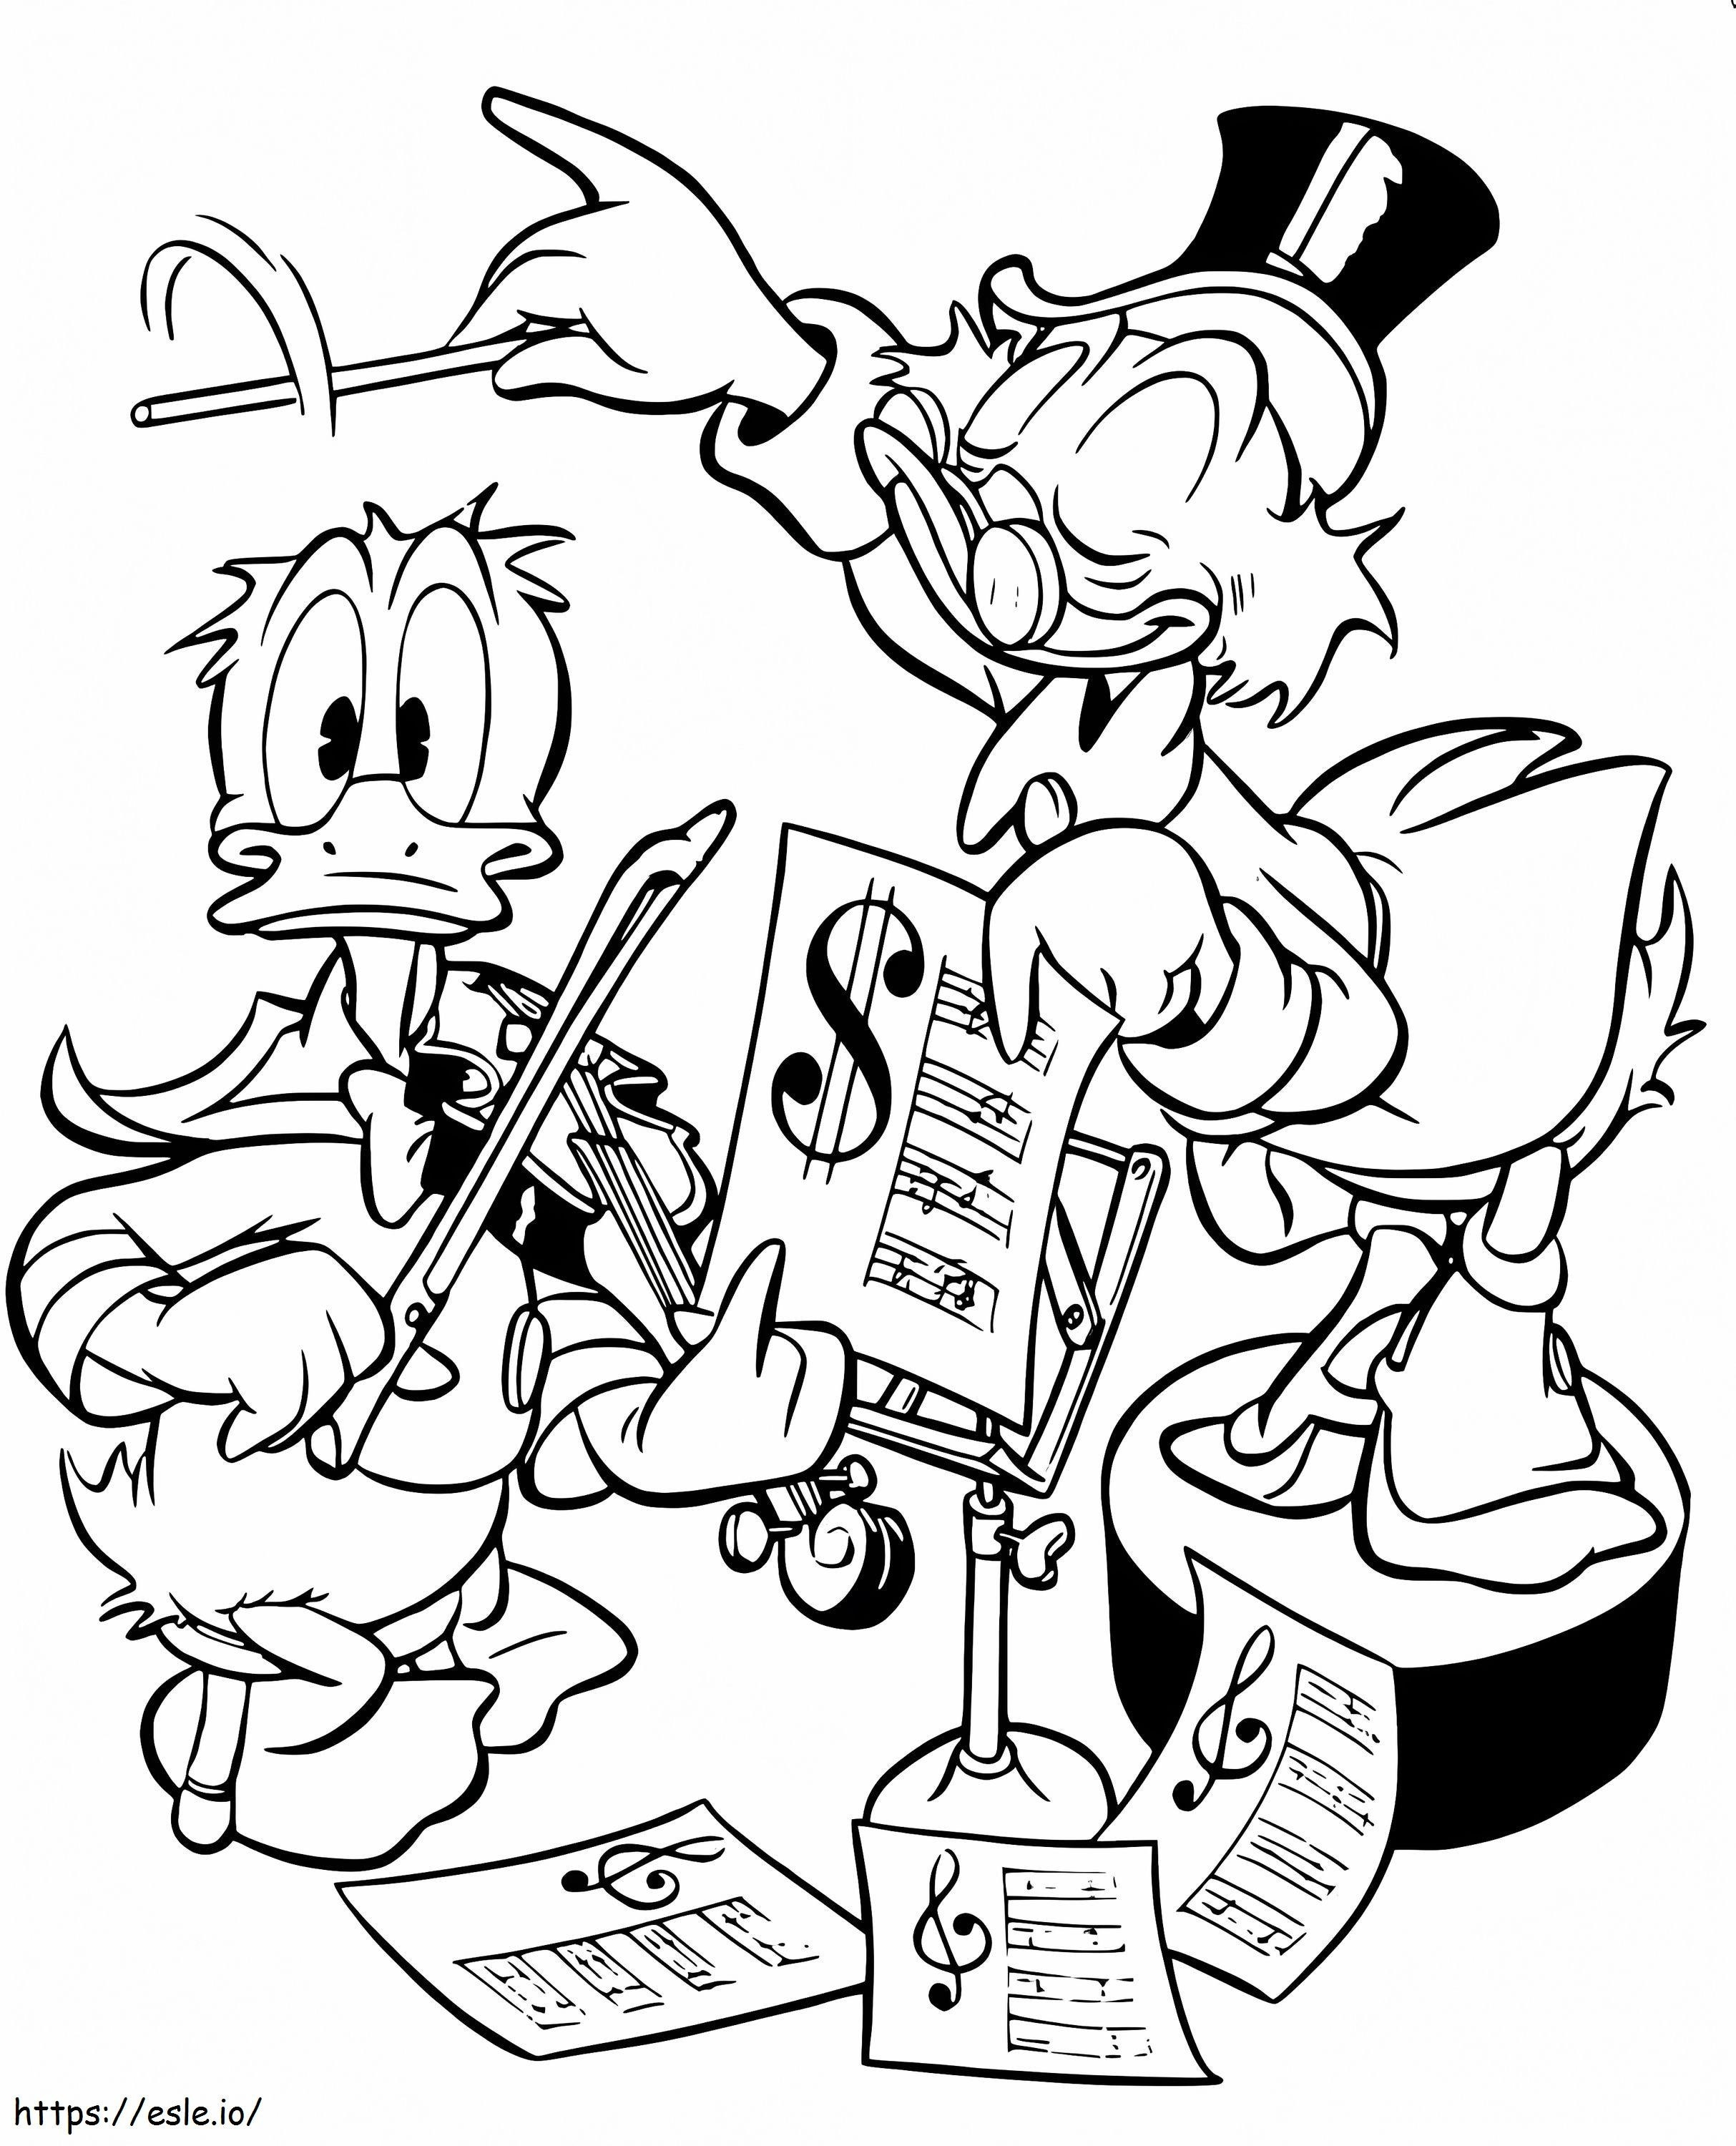 Donald i Scrooge McDuck kolorowanka